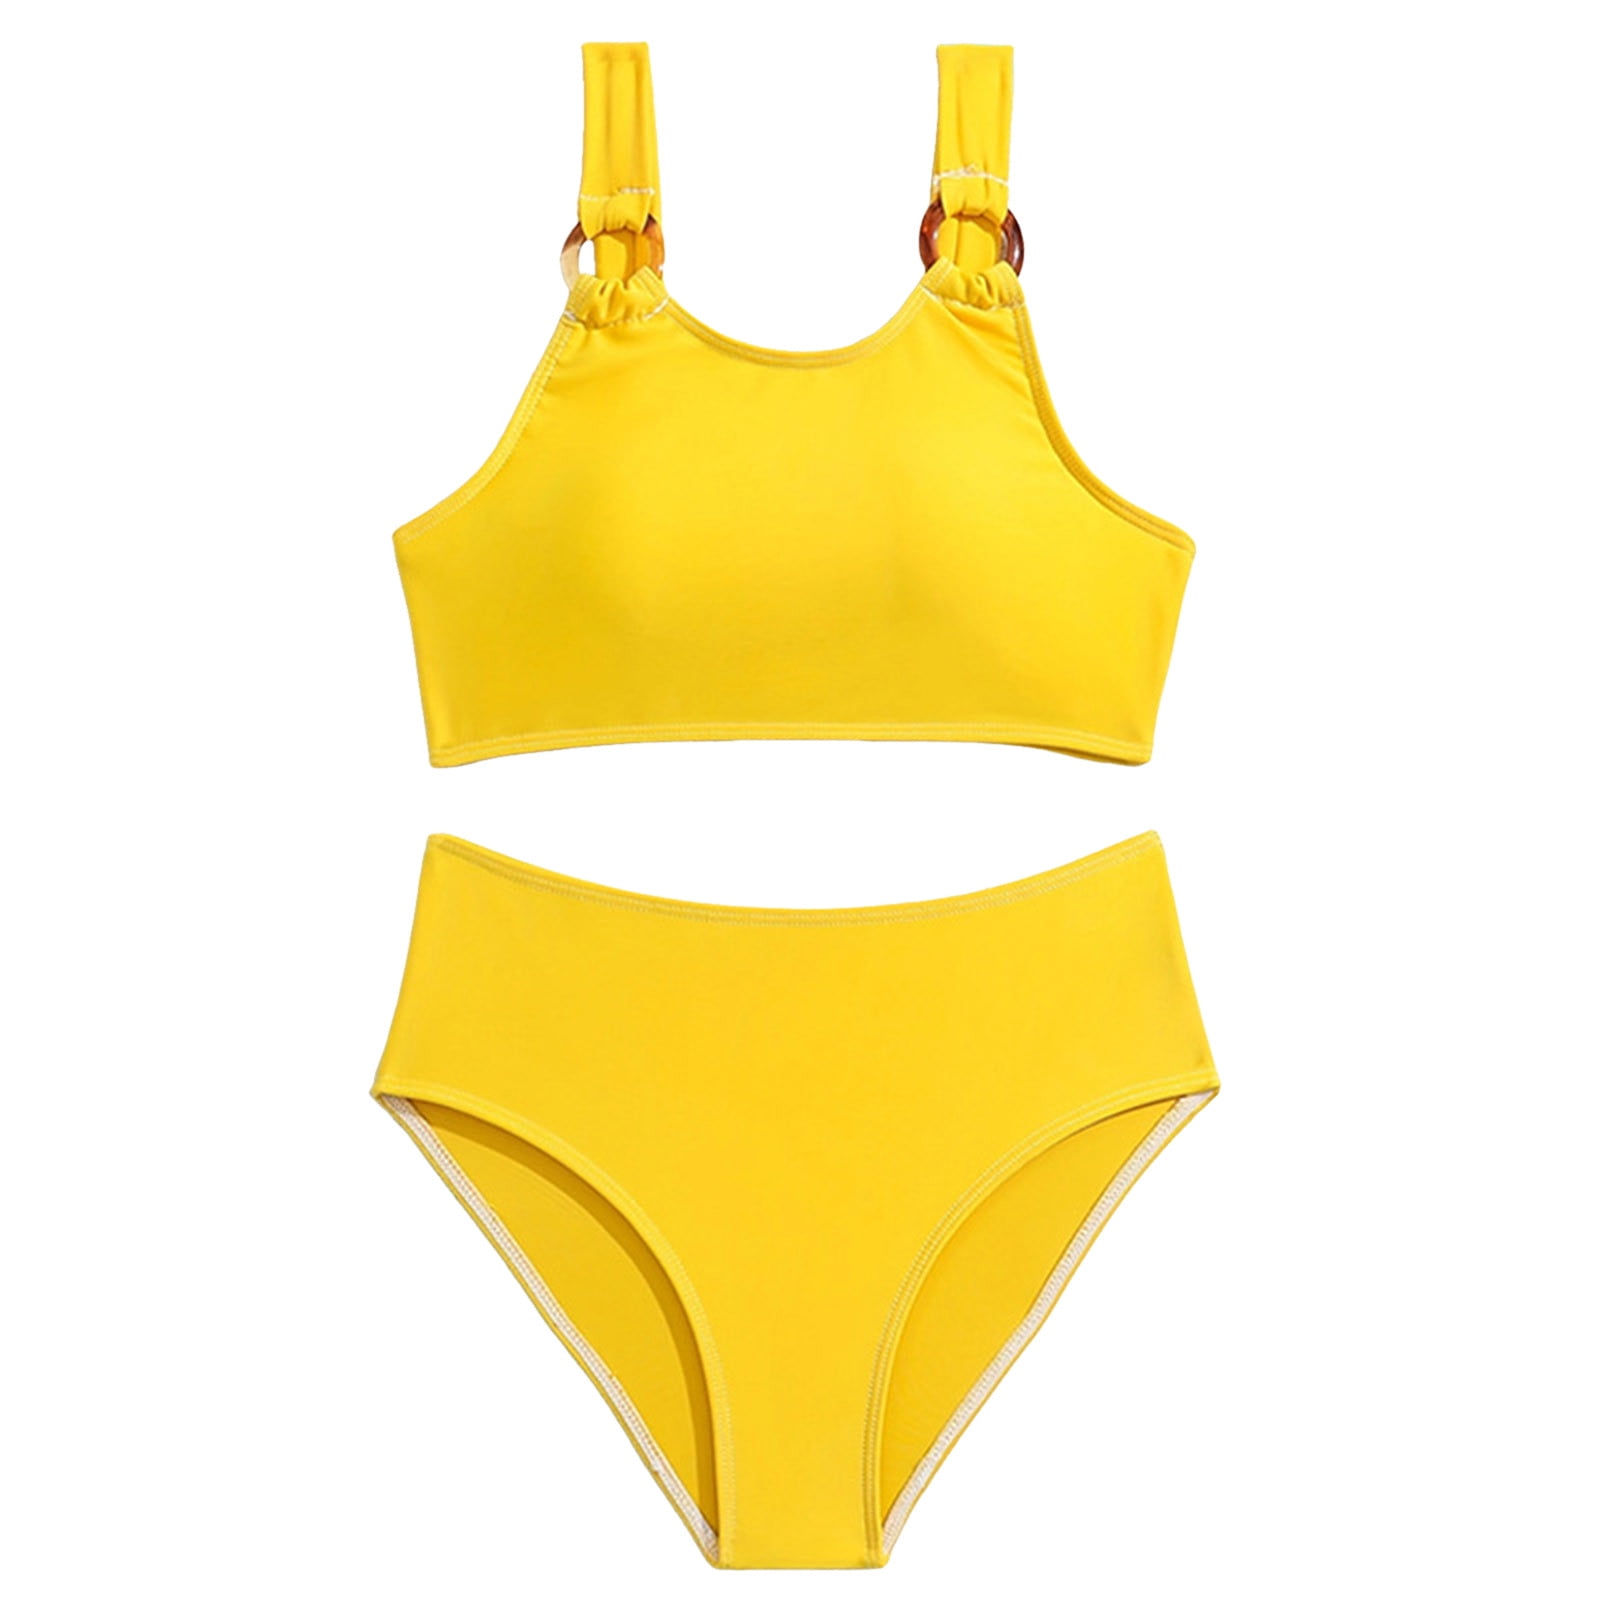 B91xZ Kid Girls Swimsuits Printed Bikini Bathing Suit with Cover Up ...